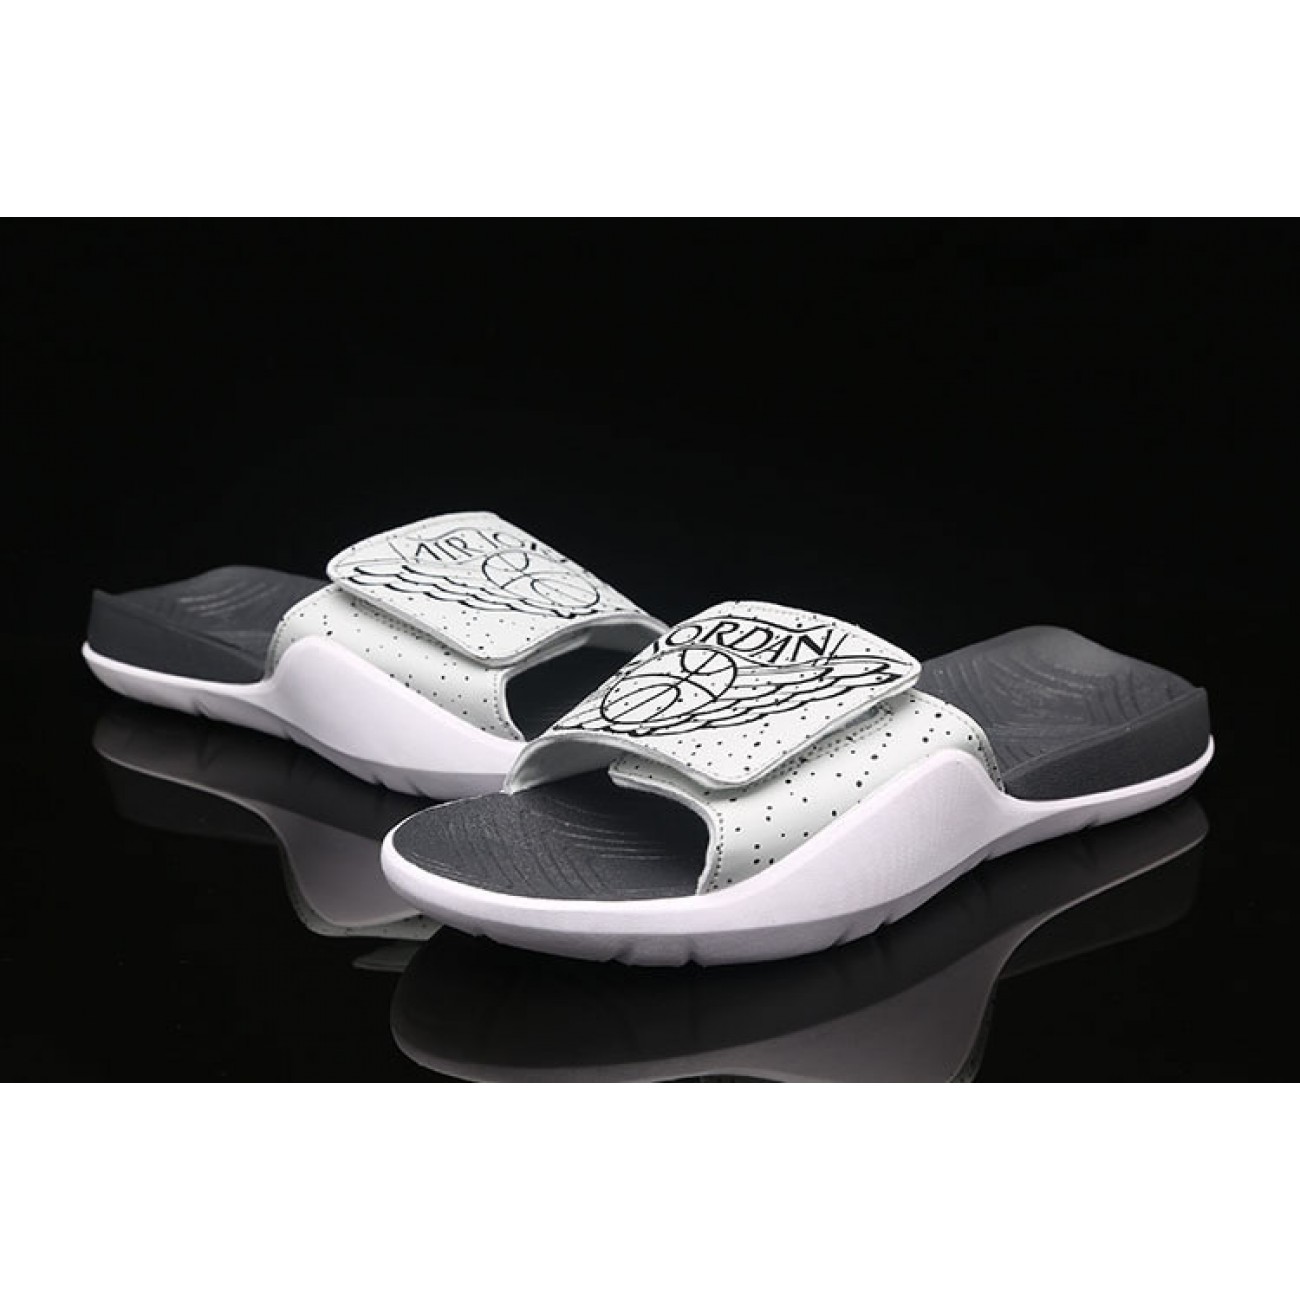 Air Jordan Hydro 7 Sandals Slippers White Black Wmns AA2516-004 Mens AA2517-004